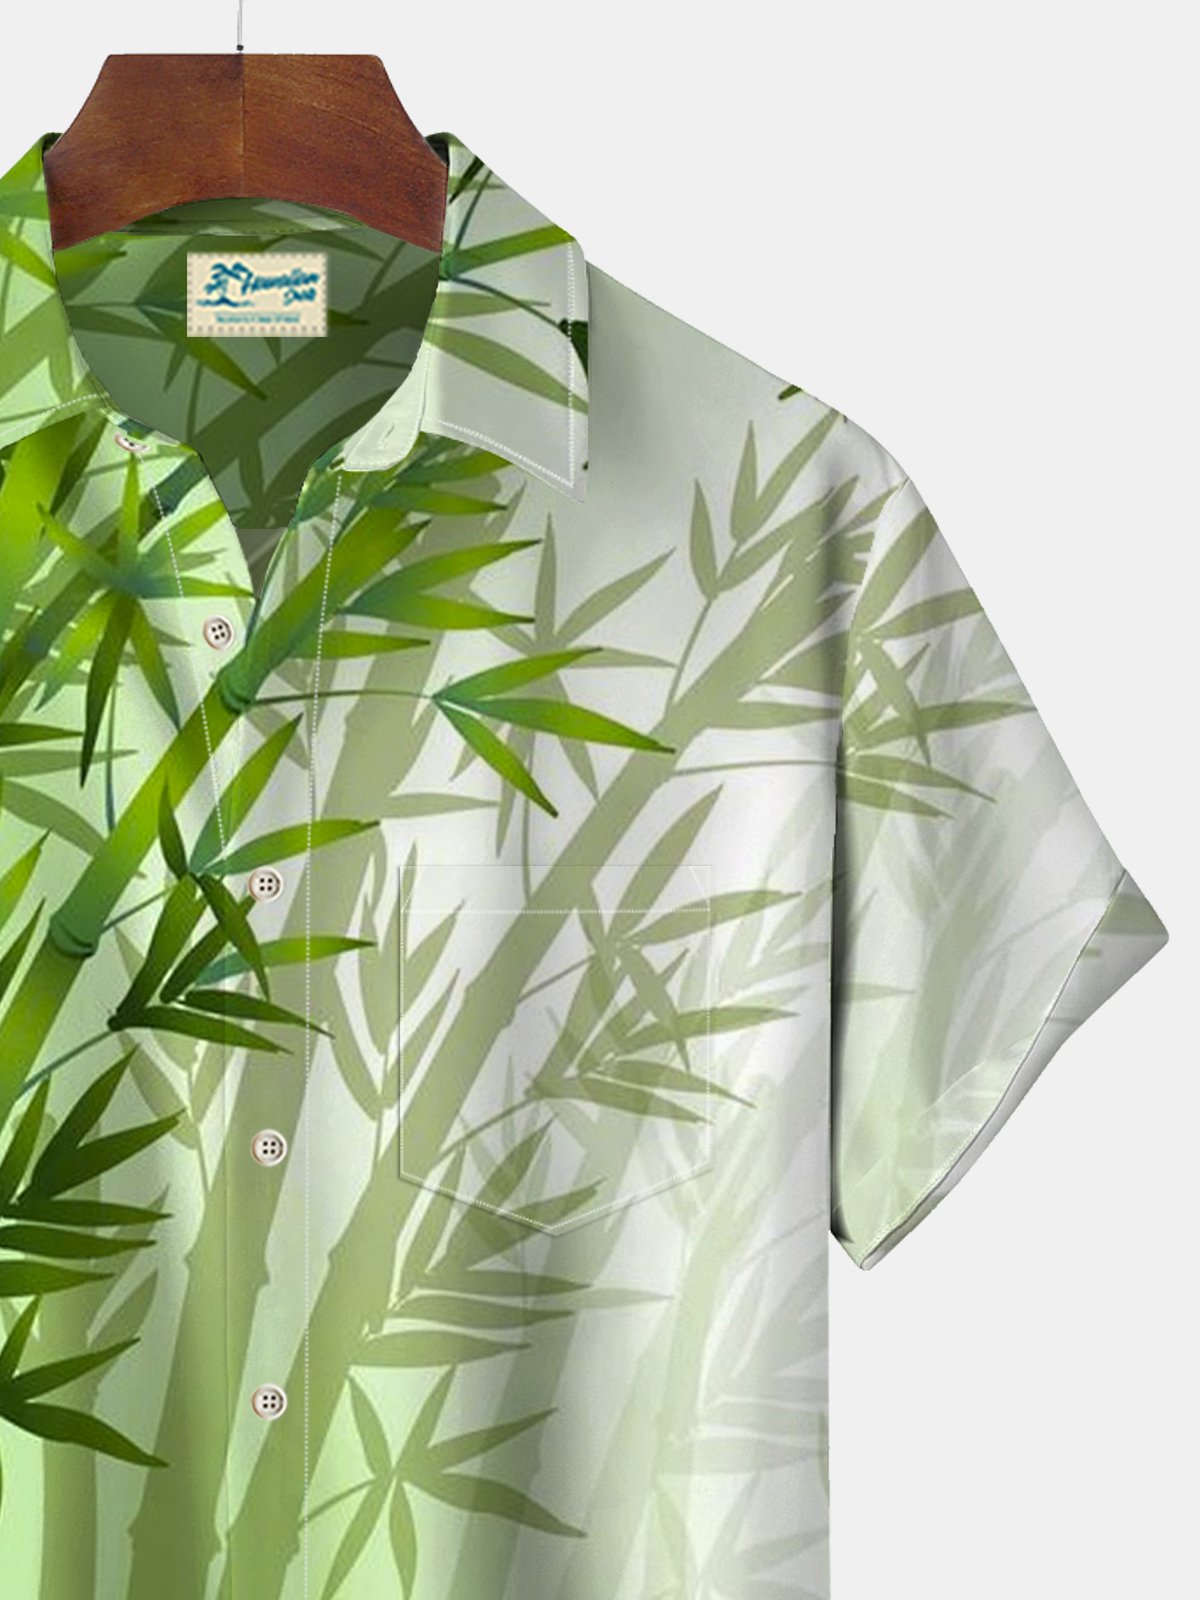 Royaura Pocket Bamboo Plant Print Beach Men's Hawaiian Big And Tall Shirt